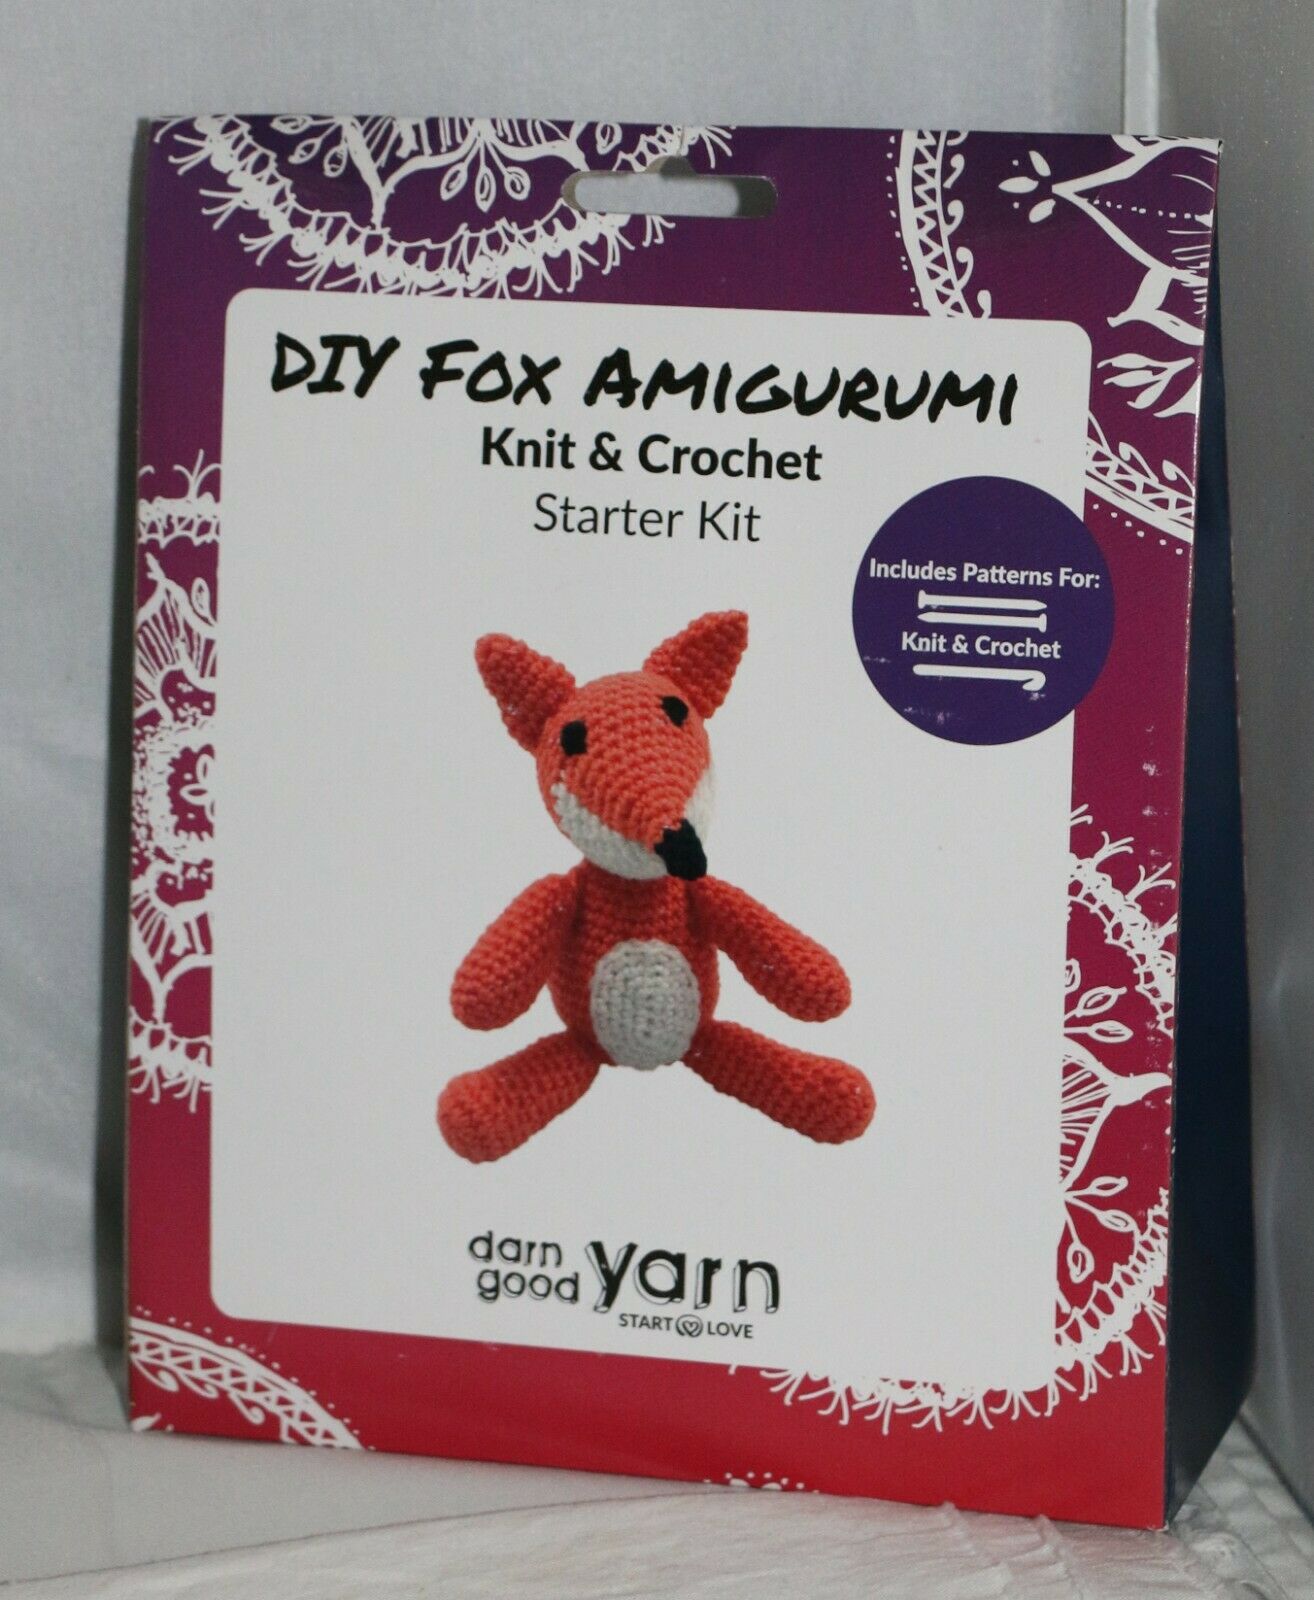 Darn Good Yarn Diy Fox Amigurumi Knit & Crochet Kit New Factory Sealed